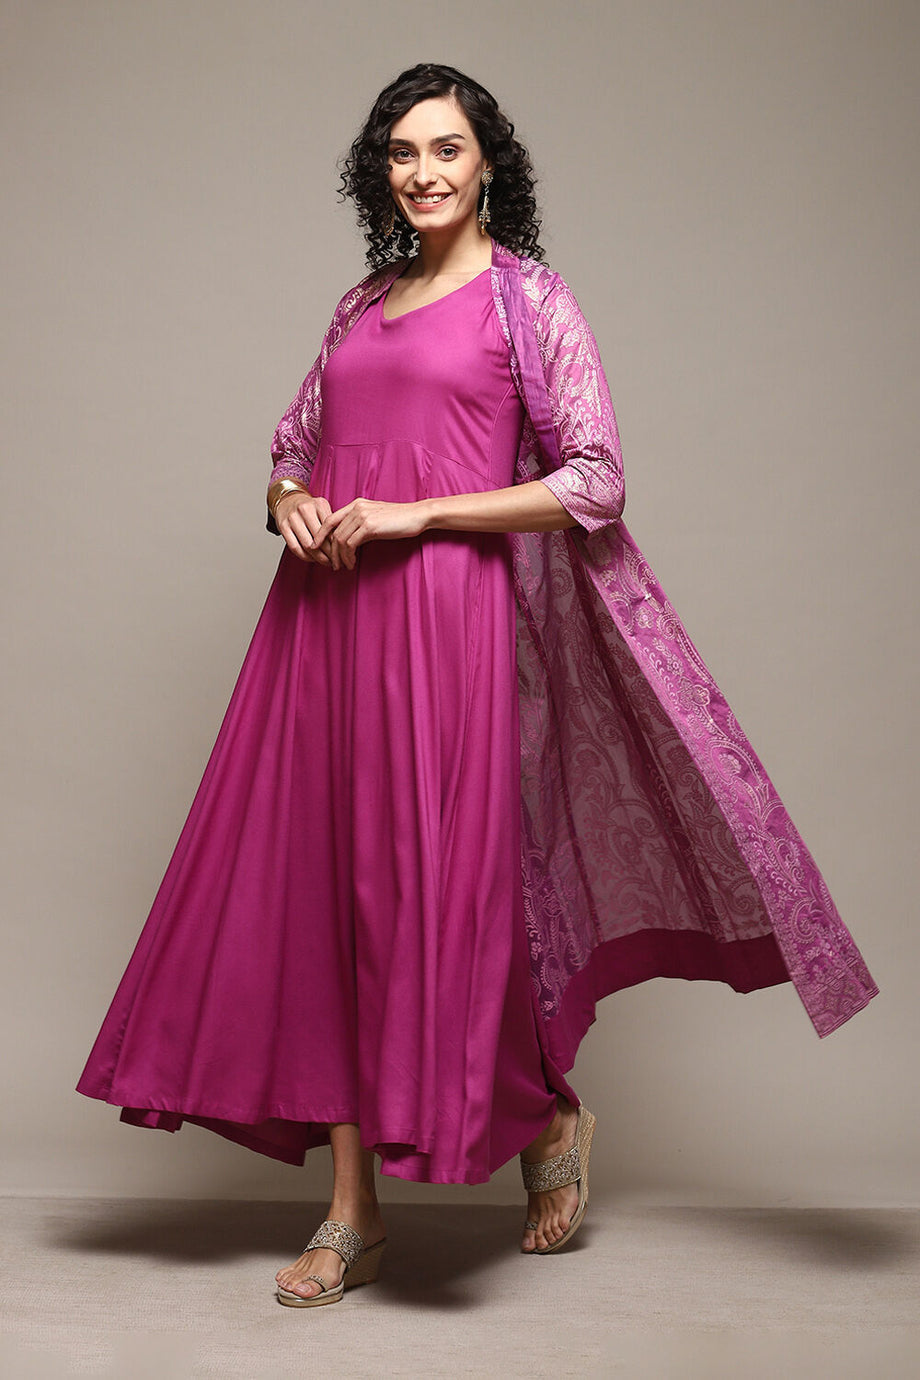 Buy BIBA Women's Lilac Cotton Tiered Printed Dress at